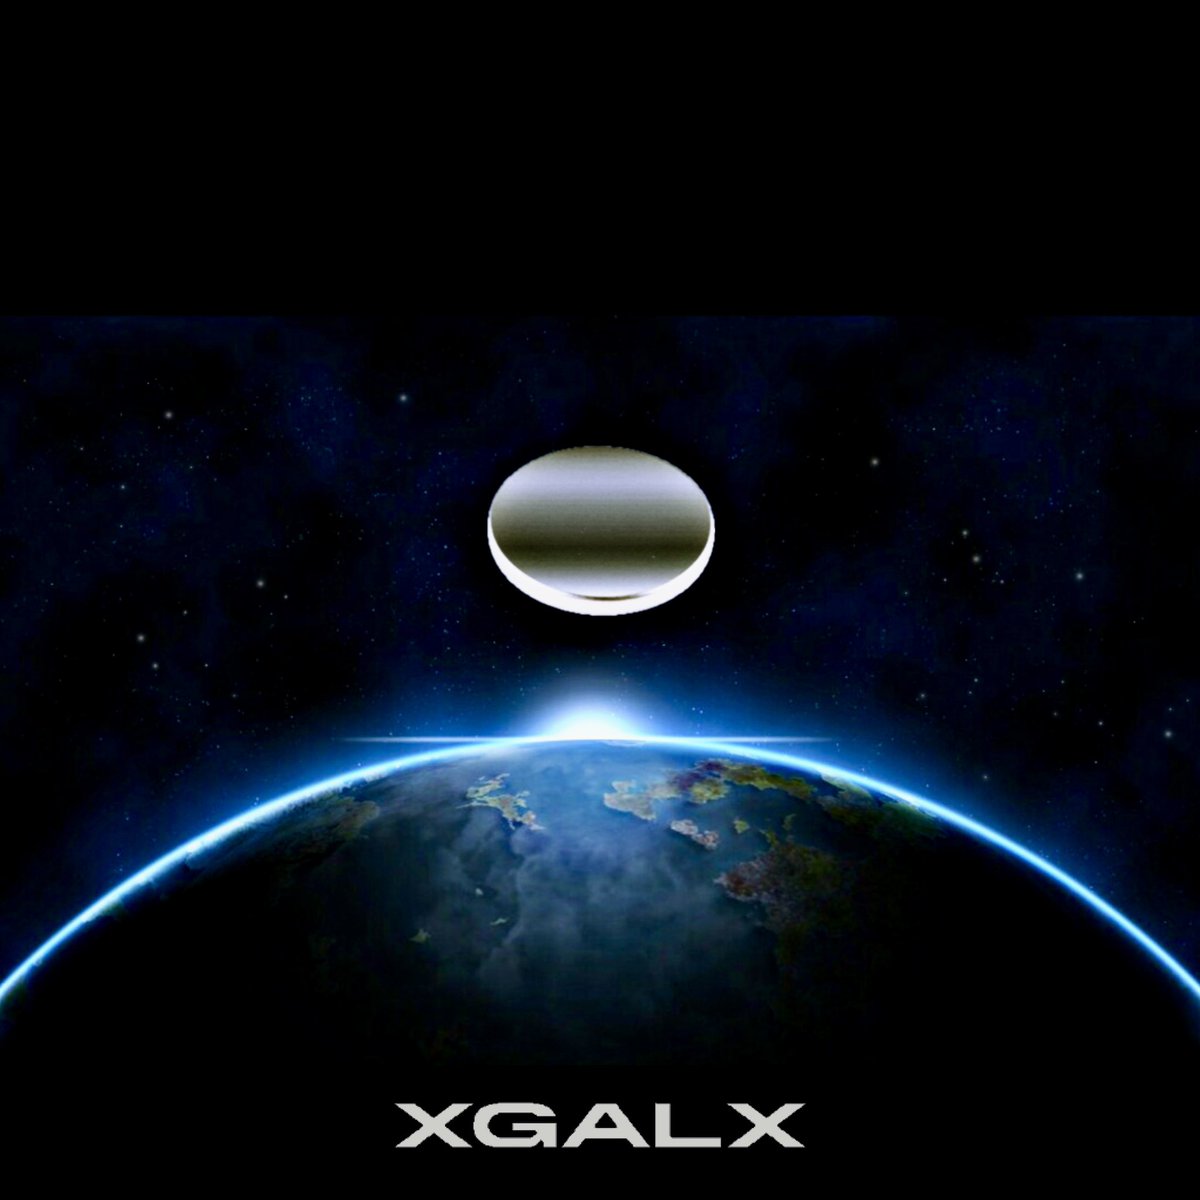 XG PRODUCTS 3に 何やらモノリスっぽい宇宙的な未確認物体が売られているというので早速見に行ってみようと思う😜